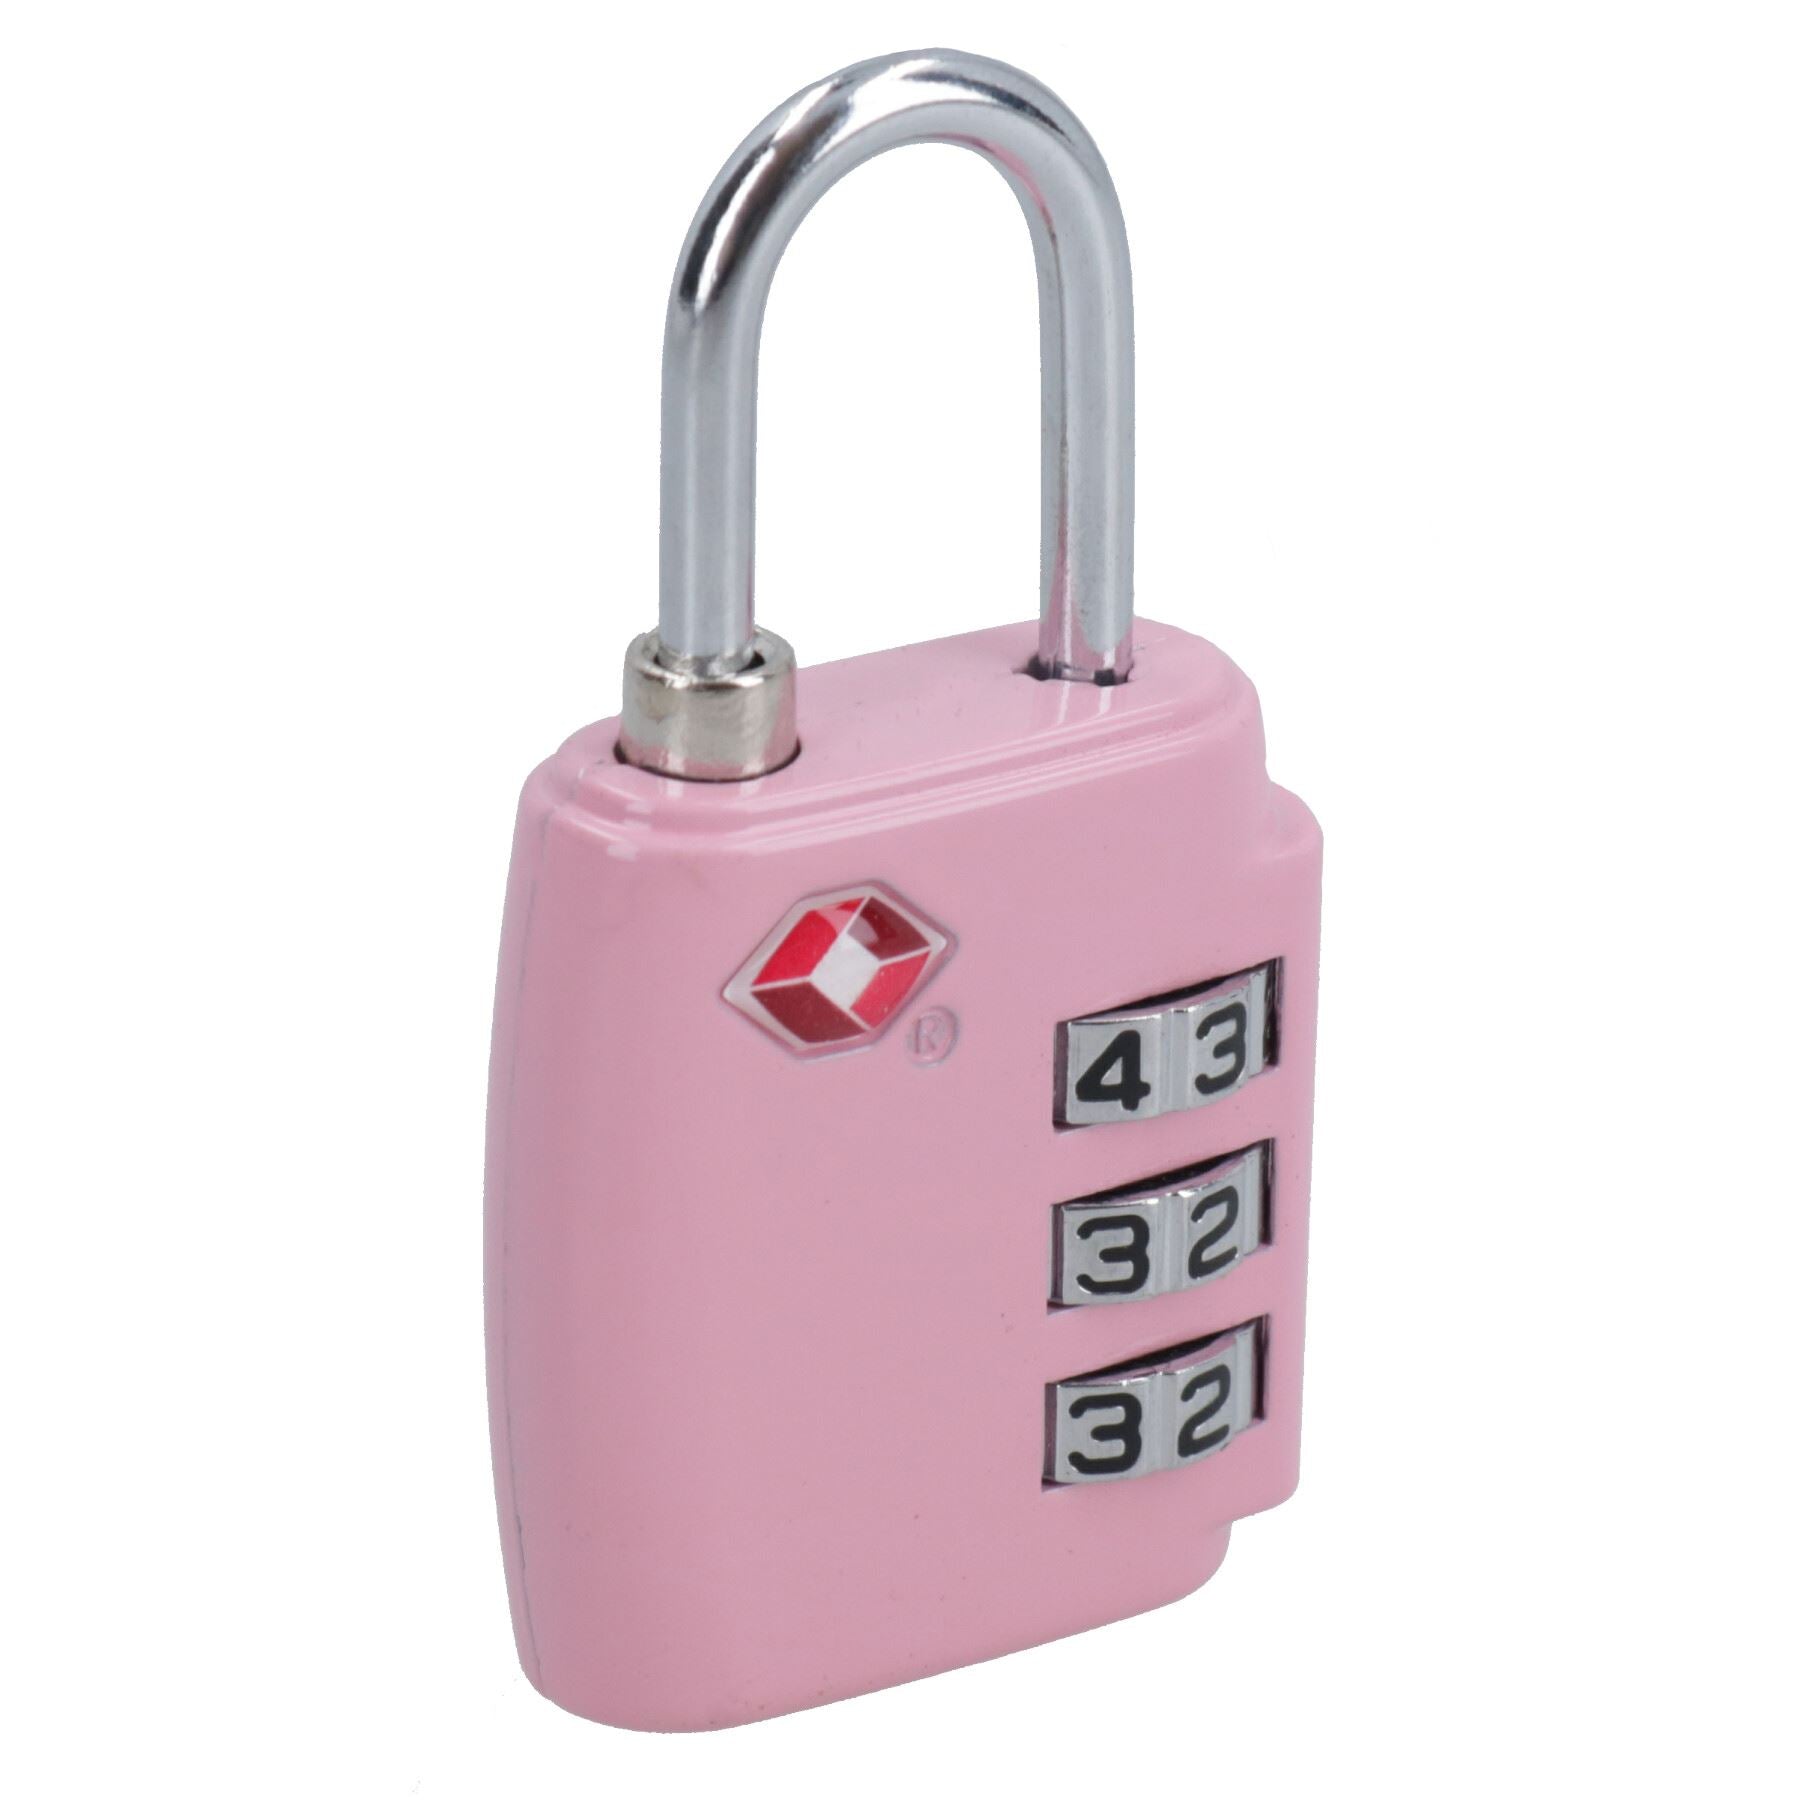 TSA Luggage Padlock Travel Lock 3 Digit Combination for Suitcases Luggage Pink